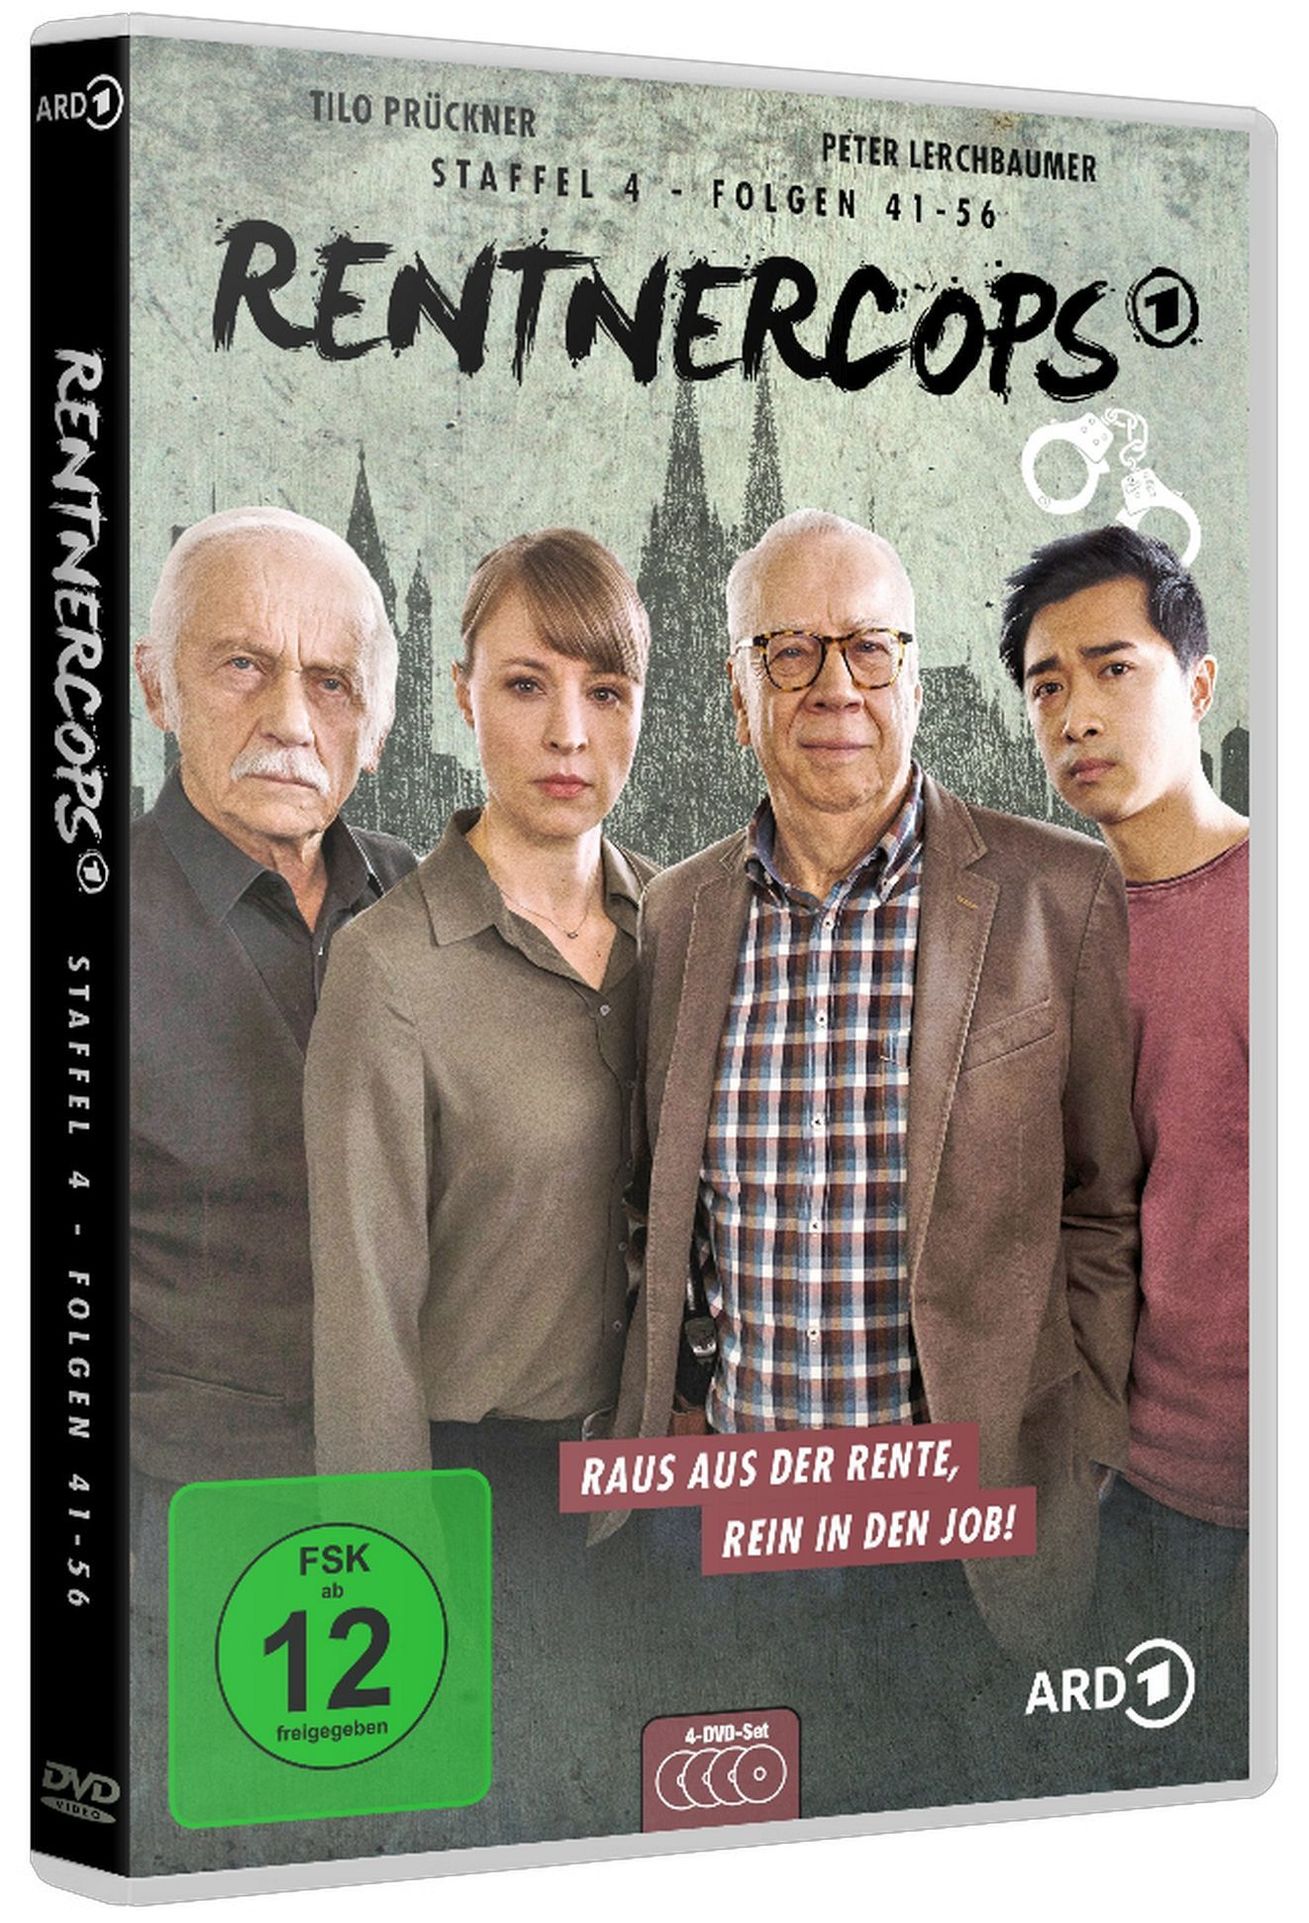 Rentnercops - Staffel 4 DVD bei Weltbild.de bestellen